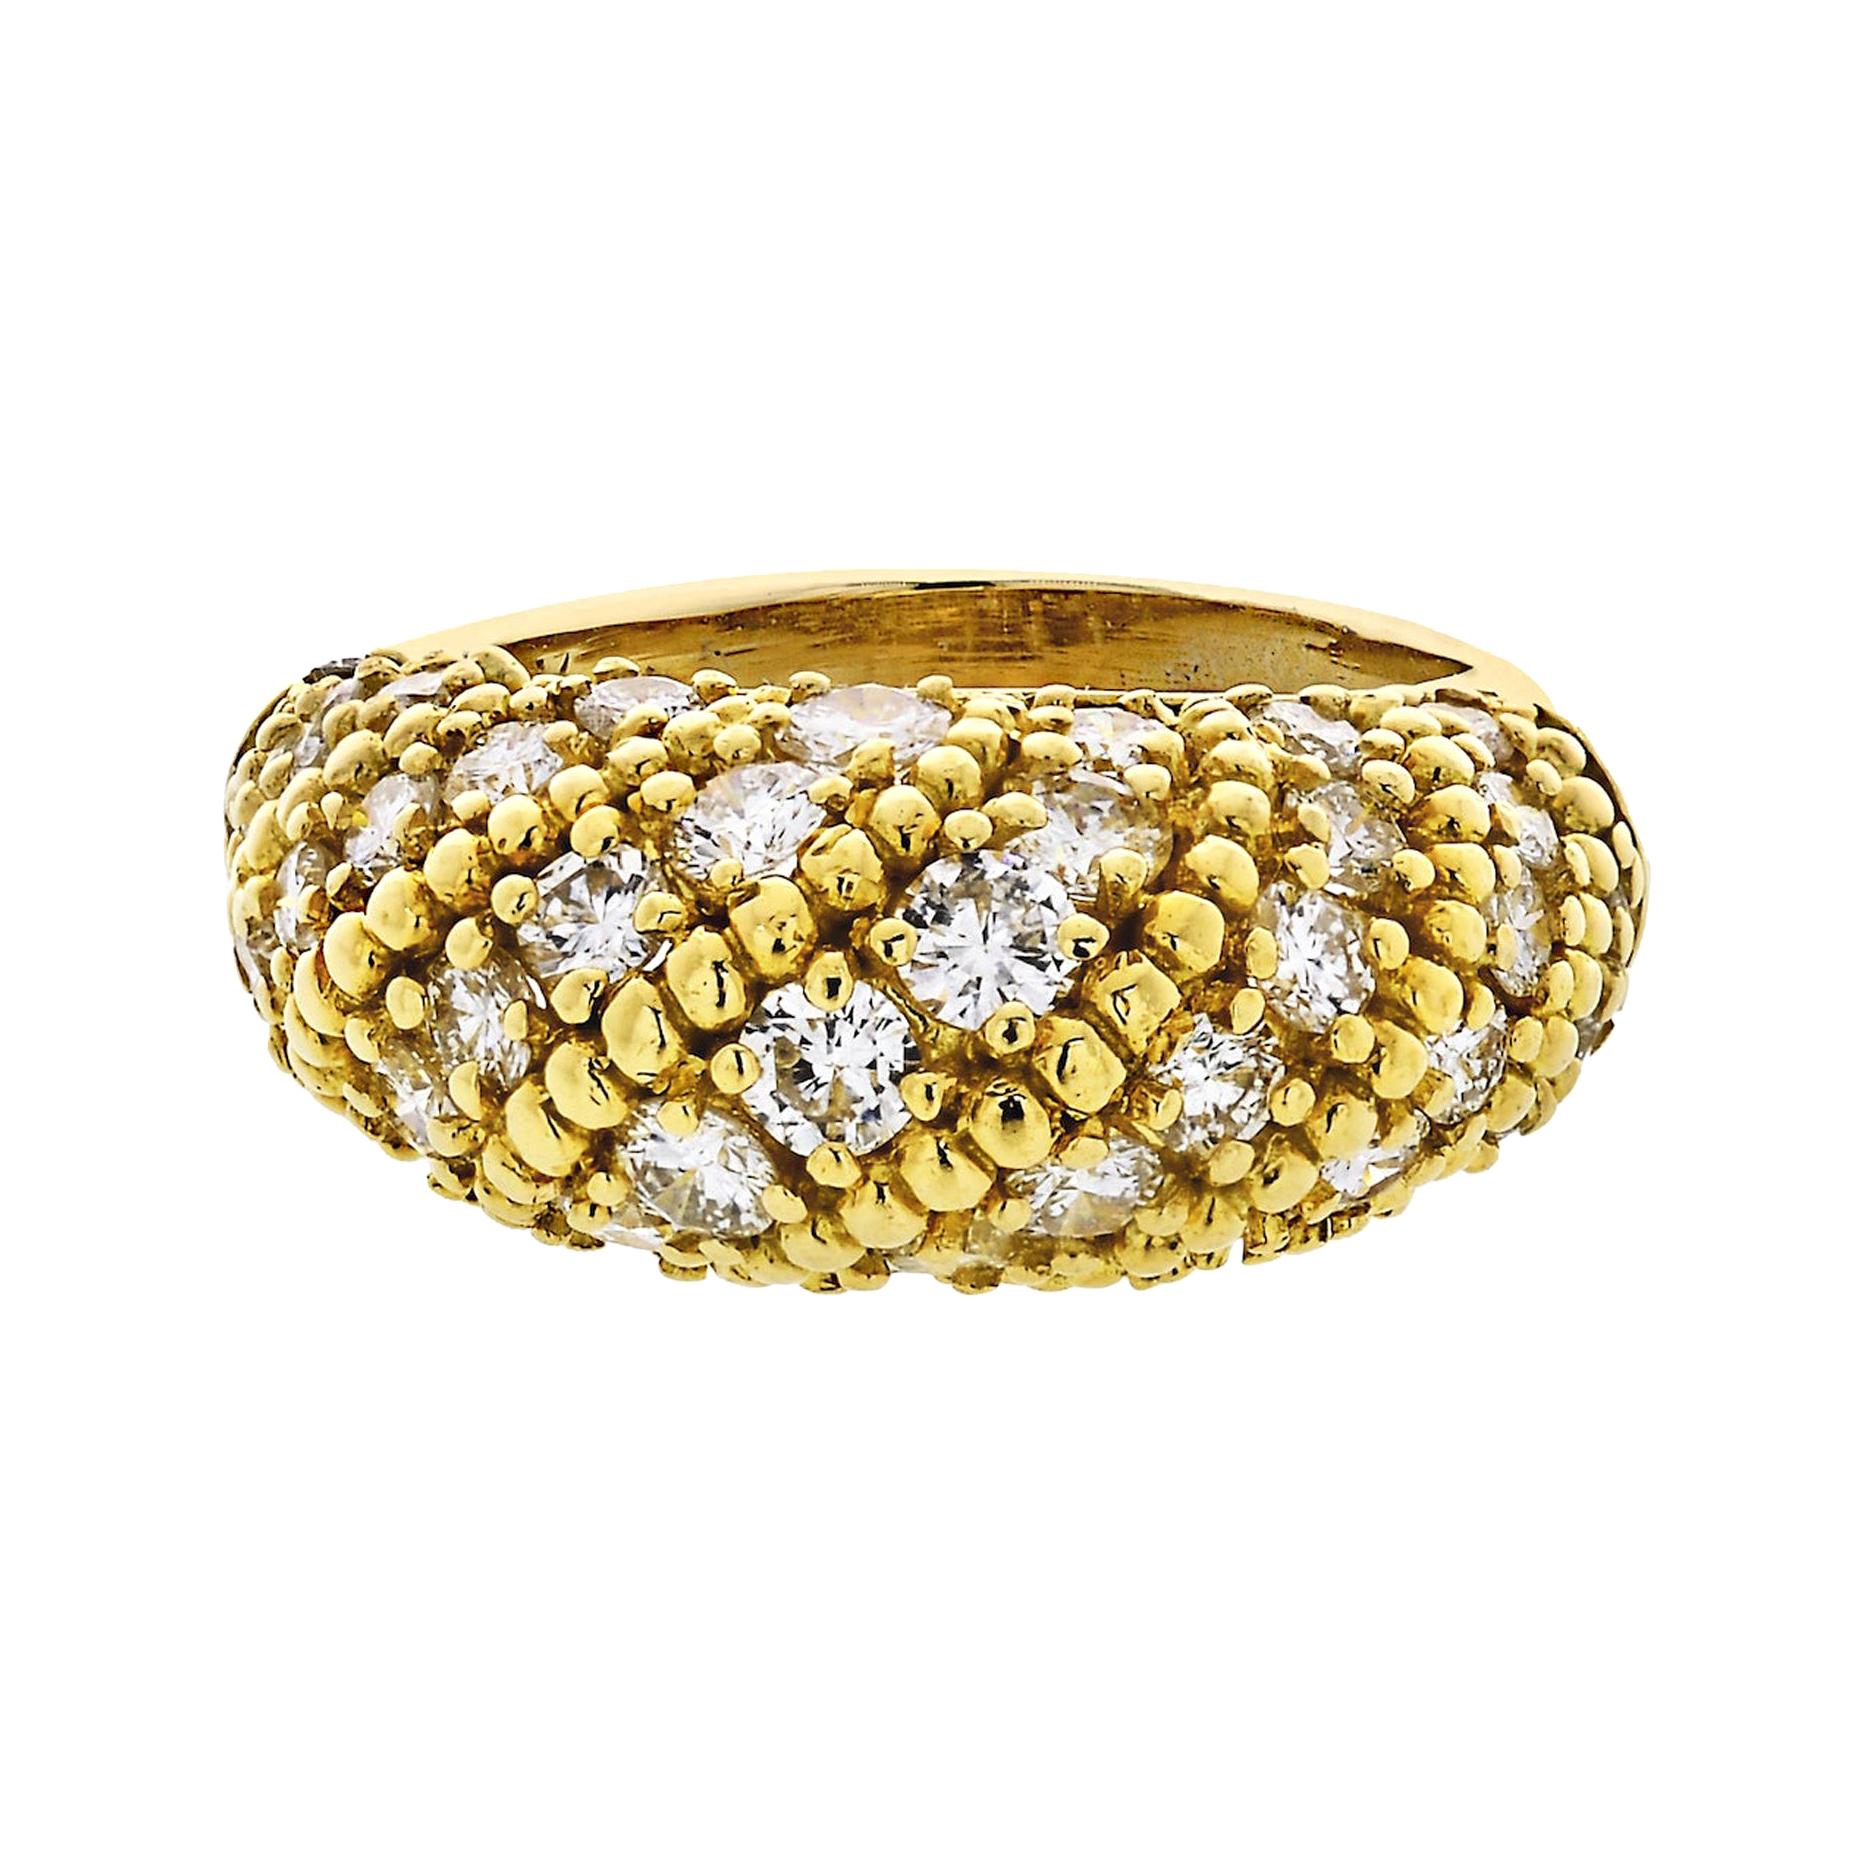 Van Cleef & Arpels 1970s 18 Karat Yellow Gold 2.50 Carat Dome Diamond Ring